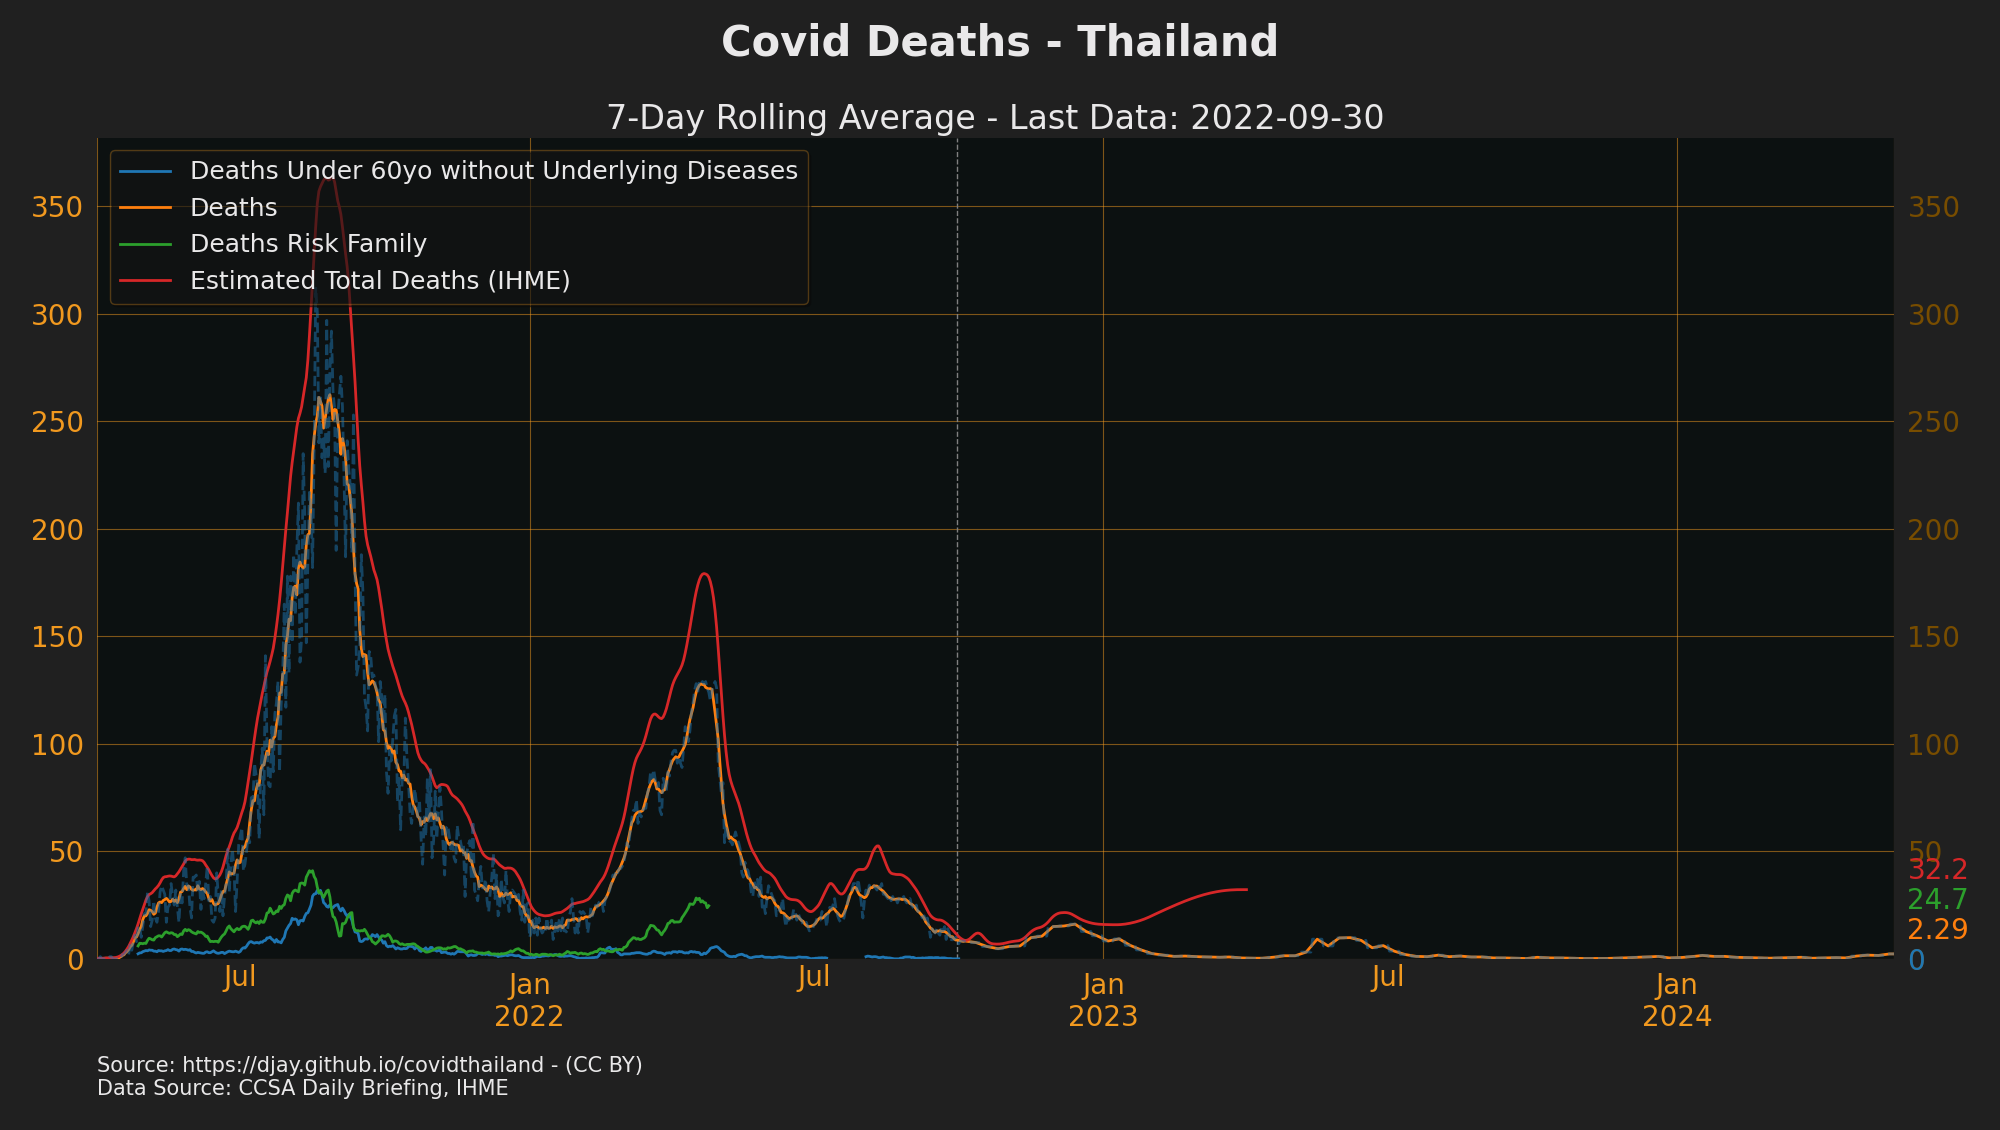 Thailand Covid Deaths by Reason